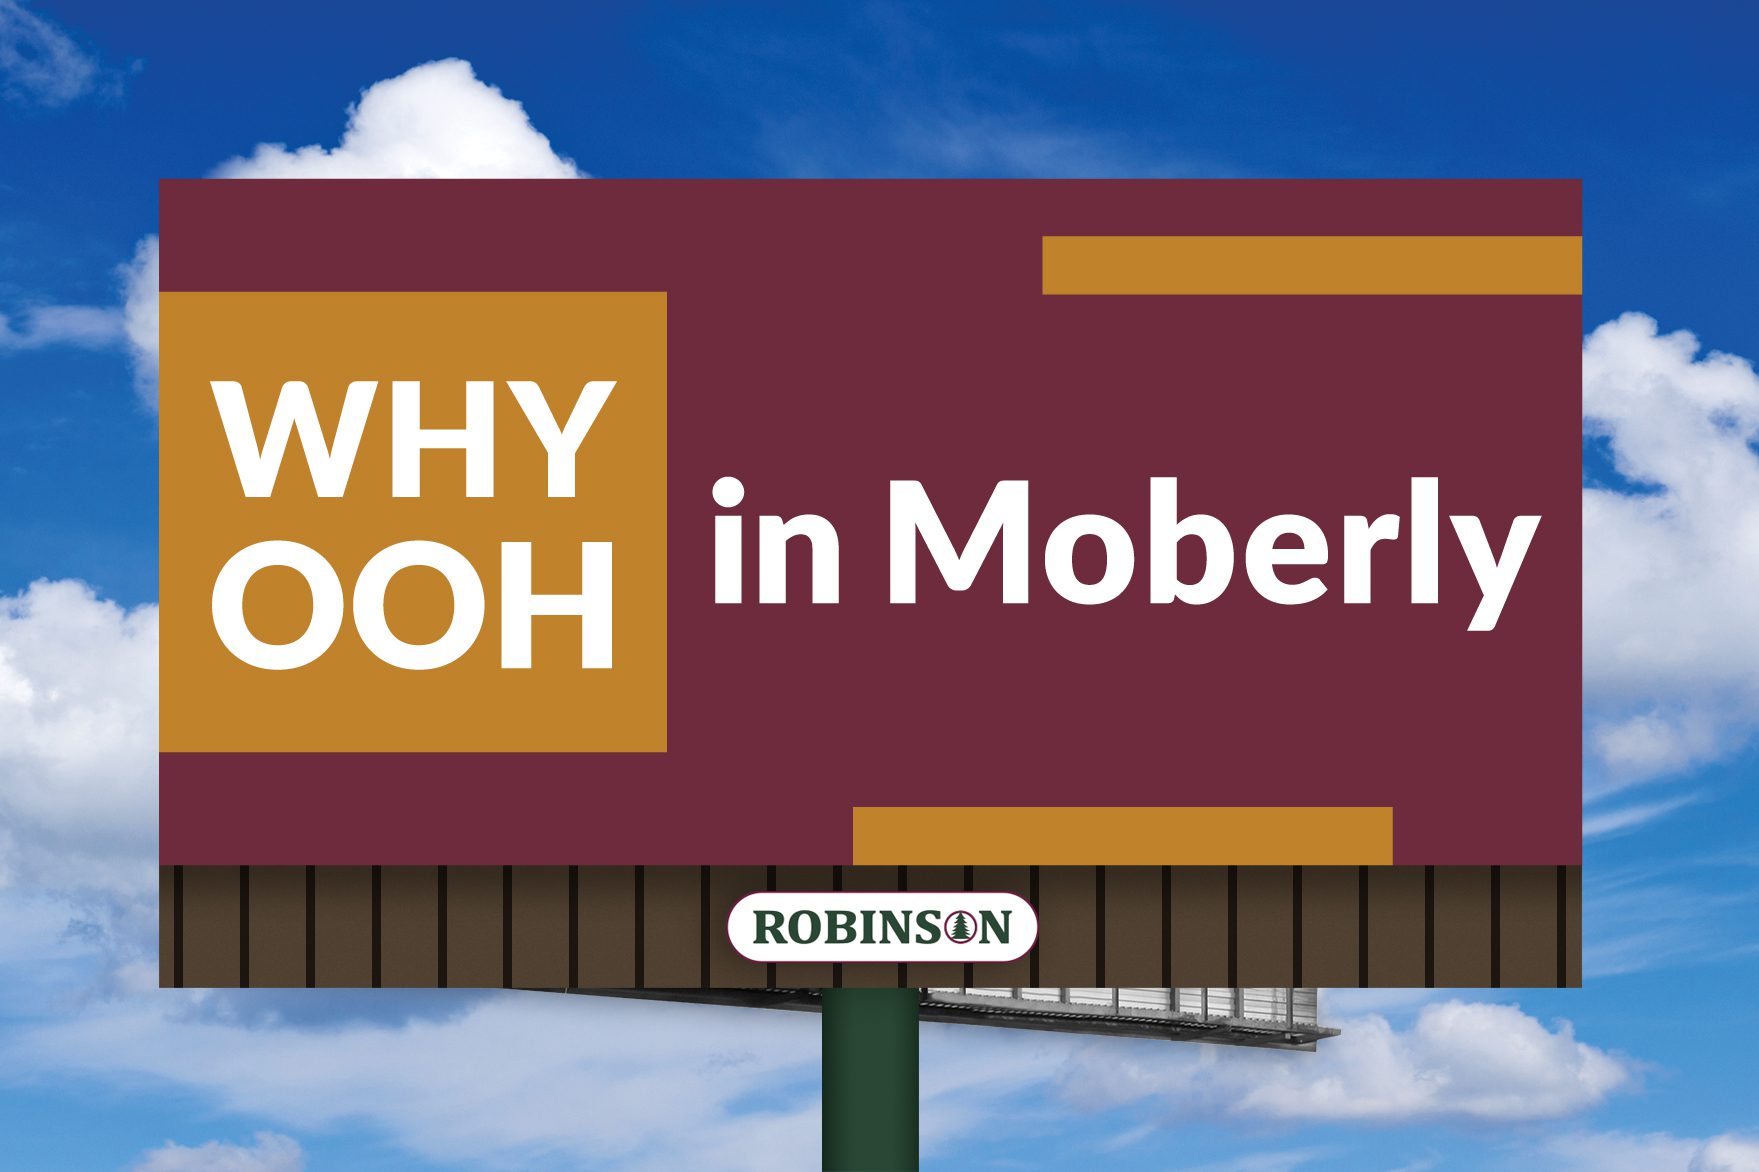 Moberly, Missouri digital billboard advertising